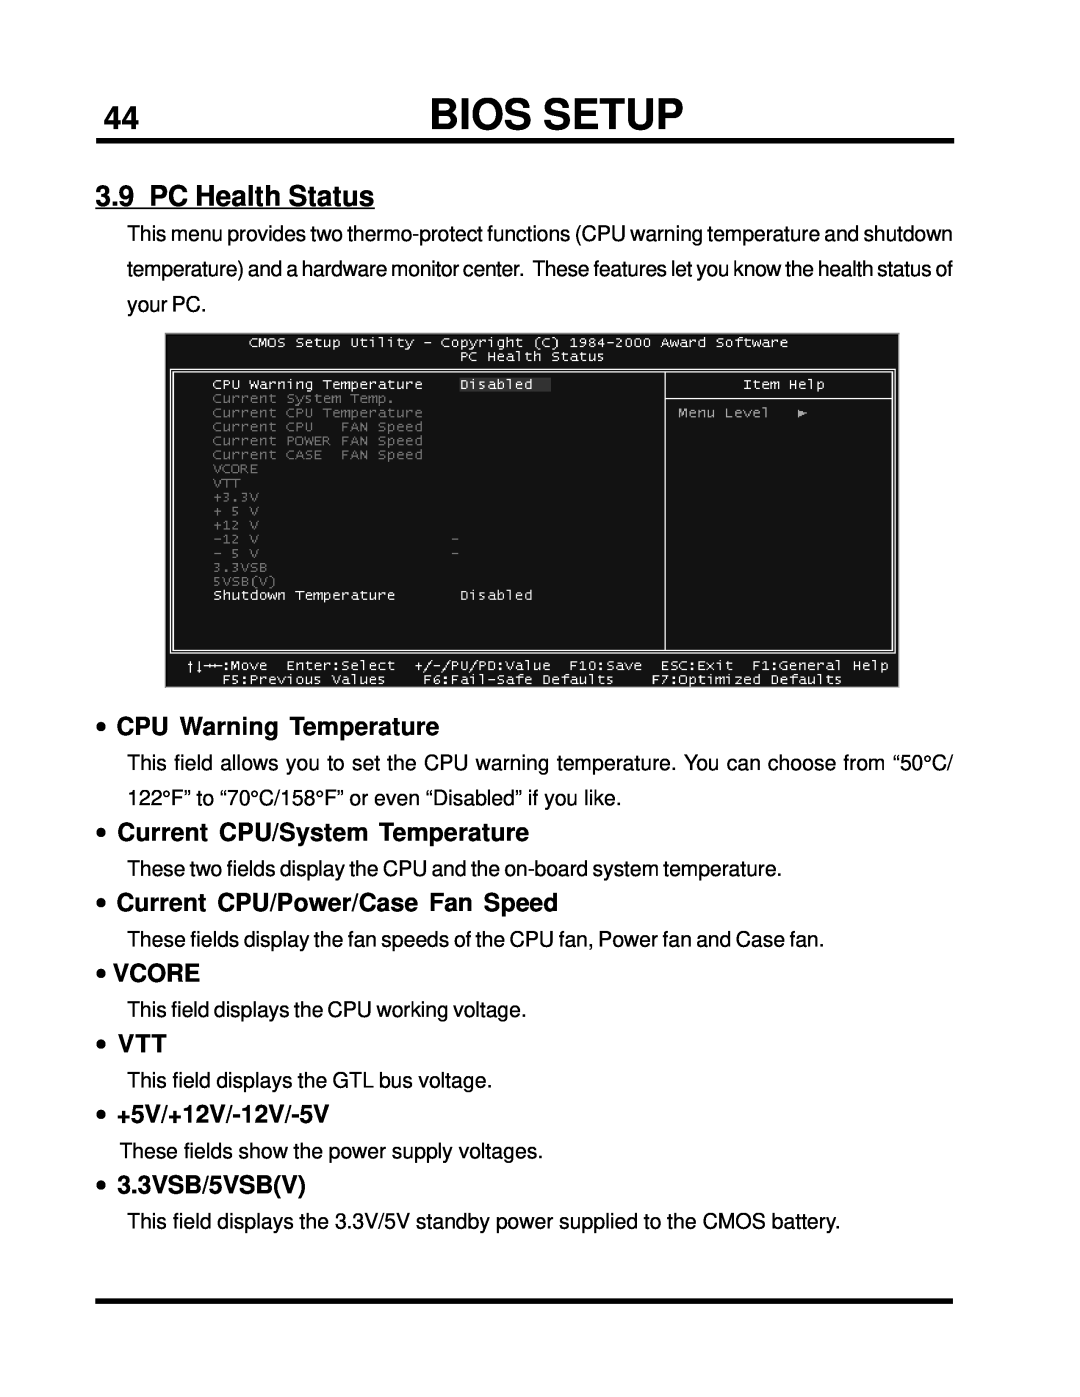 Intel TS-ASP3 PC Health Status, •CPU Warning Temperature, •Current CPU/System Temperature, •Vcore, •Vtt, •3.3VSB/5VSBV 